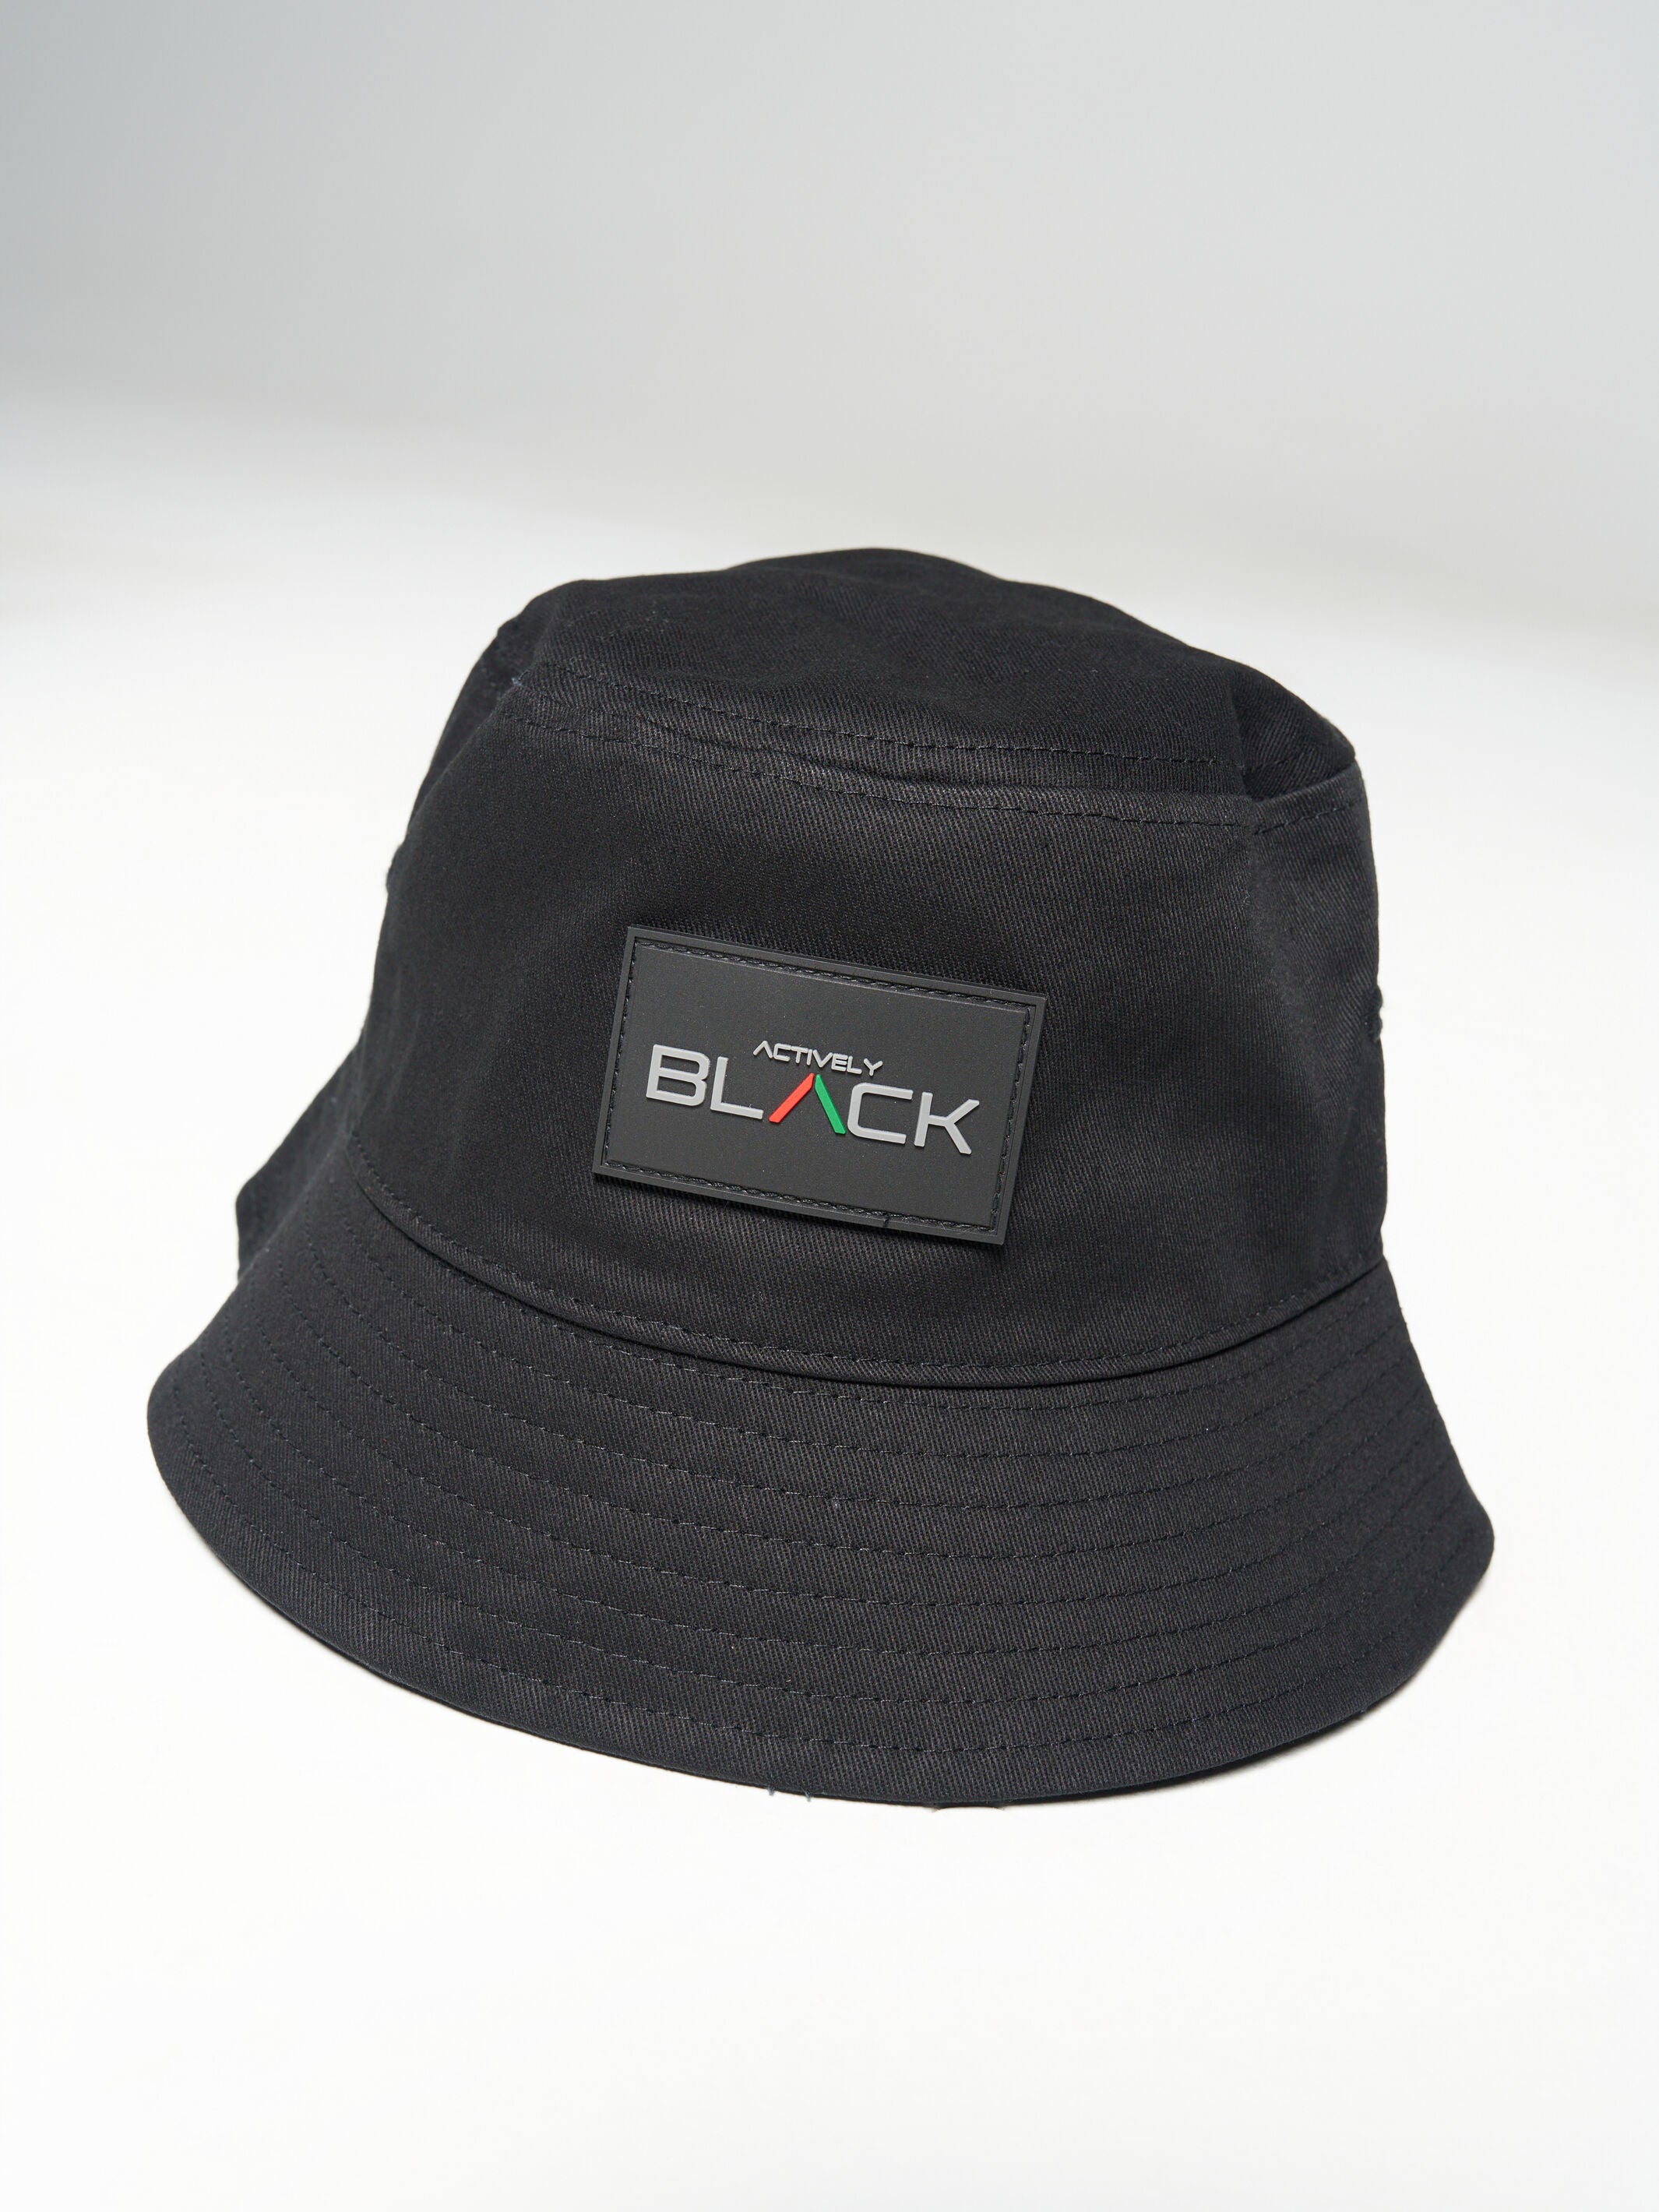 Actively Black Logo Bucket Hat